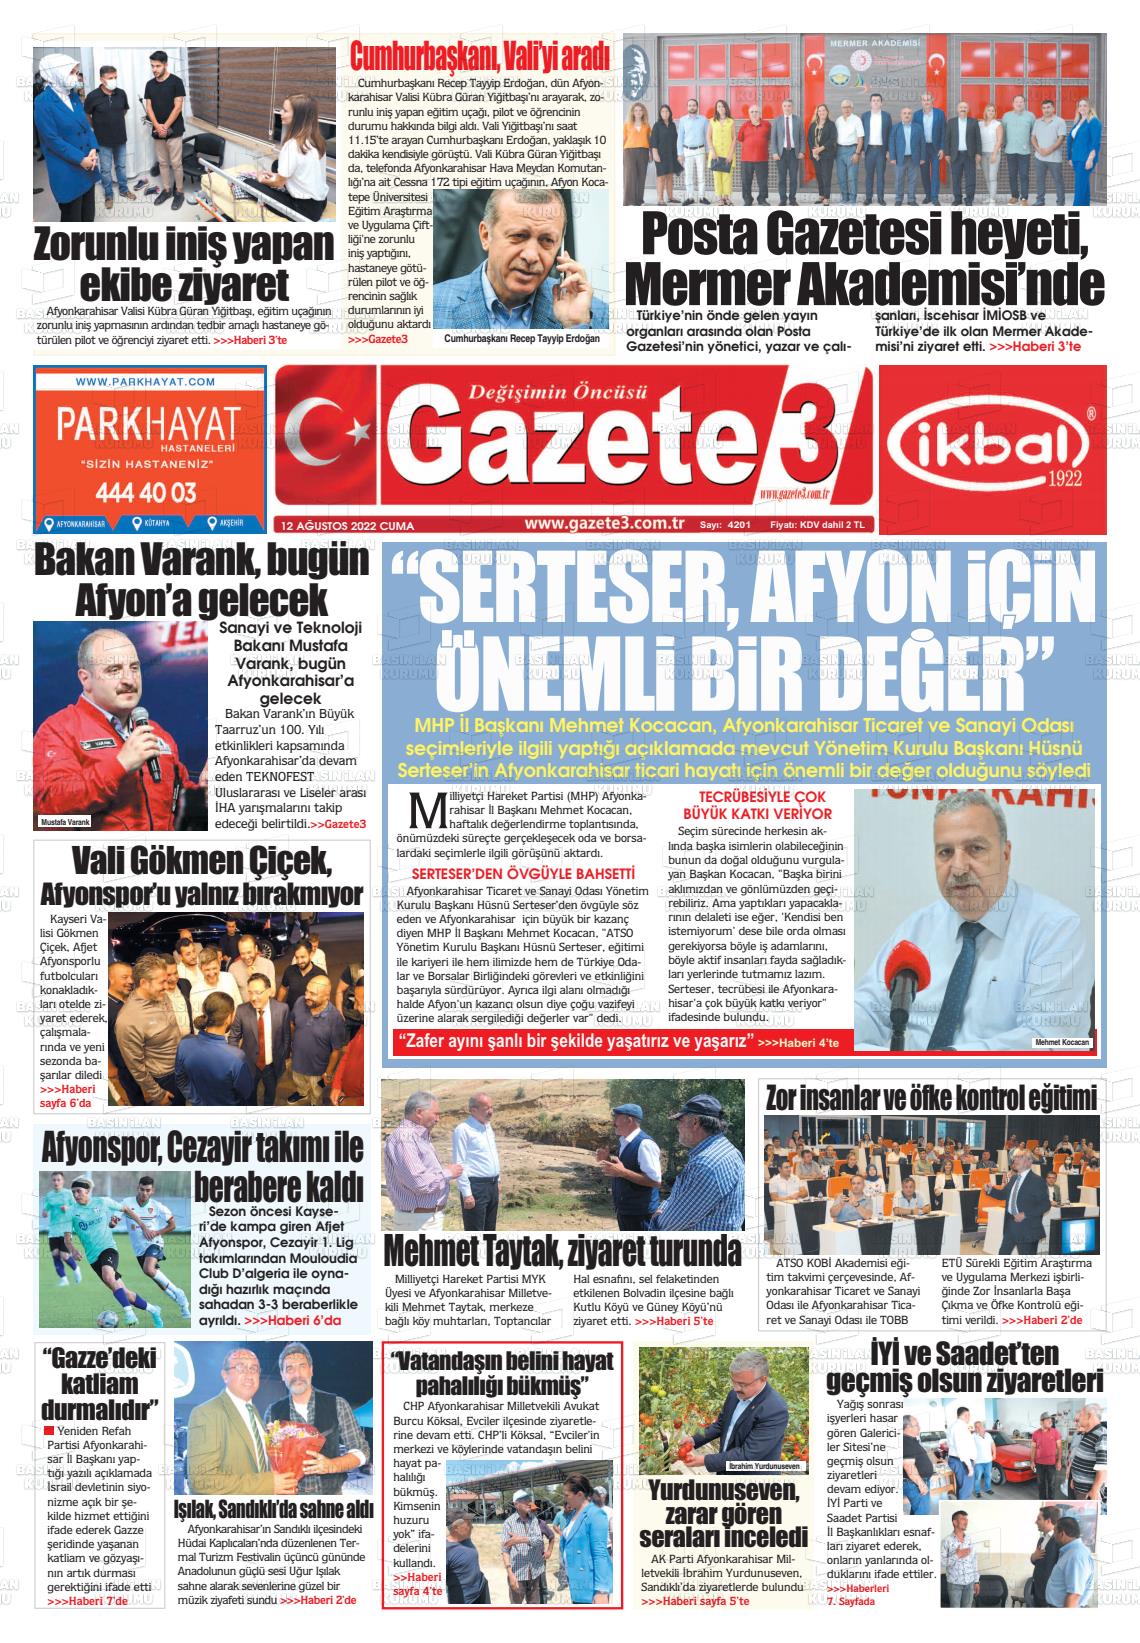 12 Ağustos 2022 Gazete 3 Gazete Manşeti